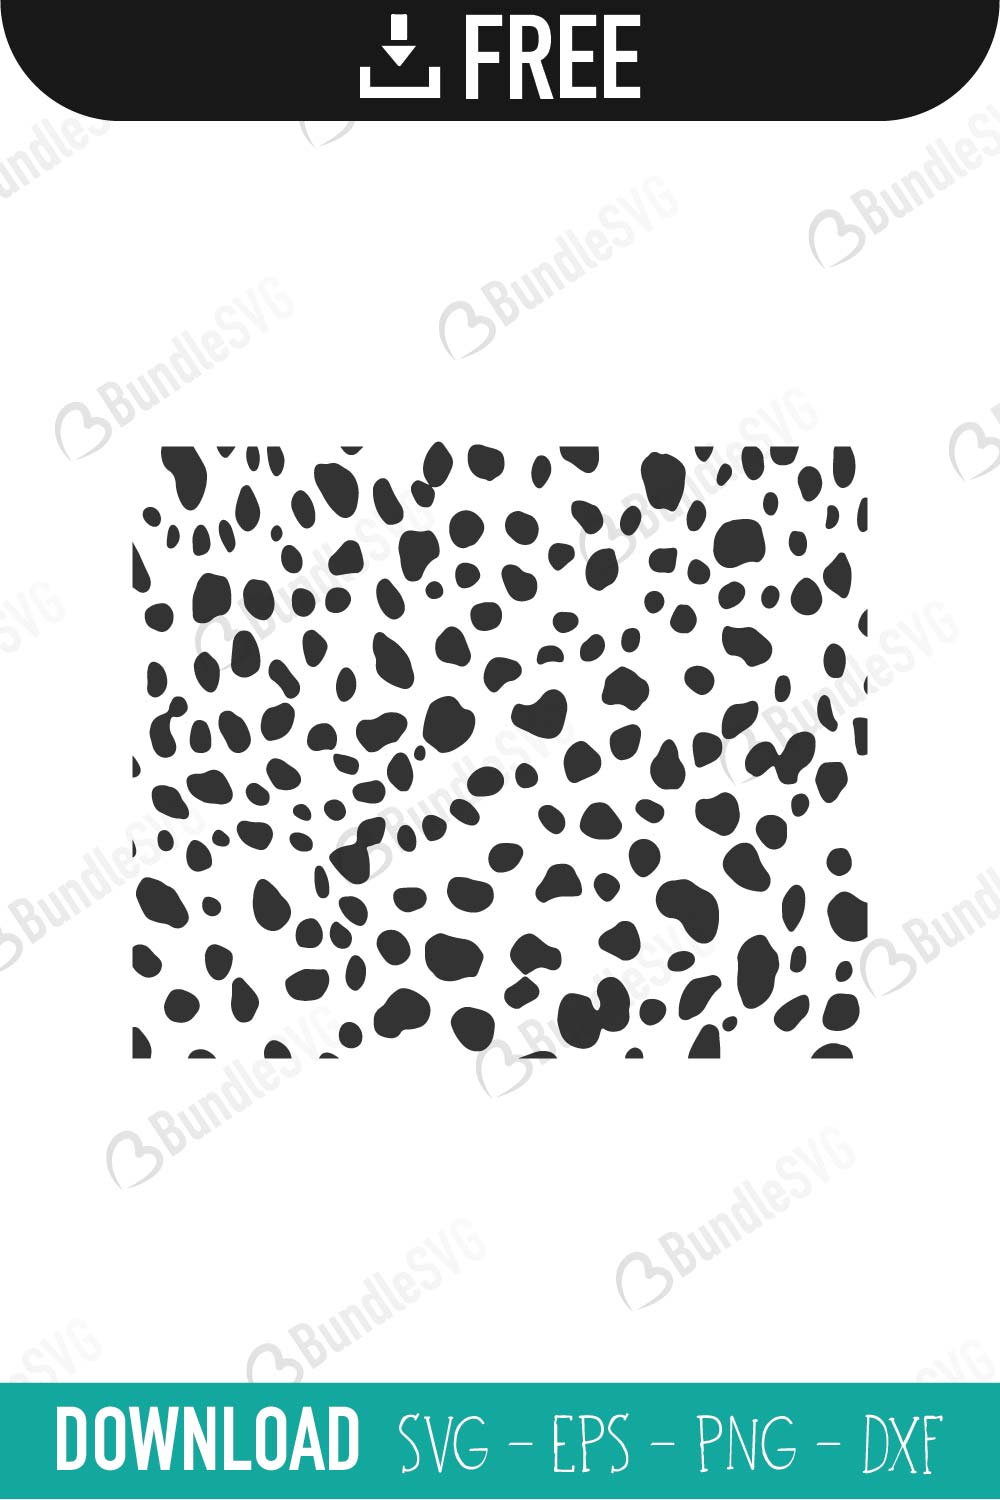 Dalmatian SVG Cut Files Free Download | BundleSVG